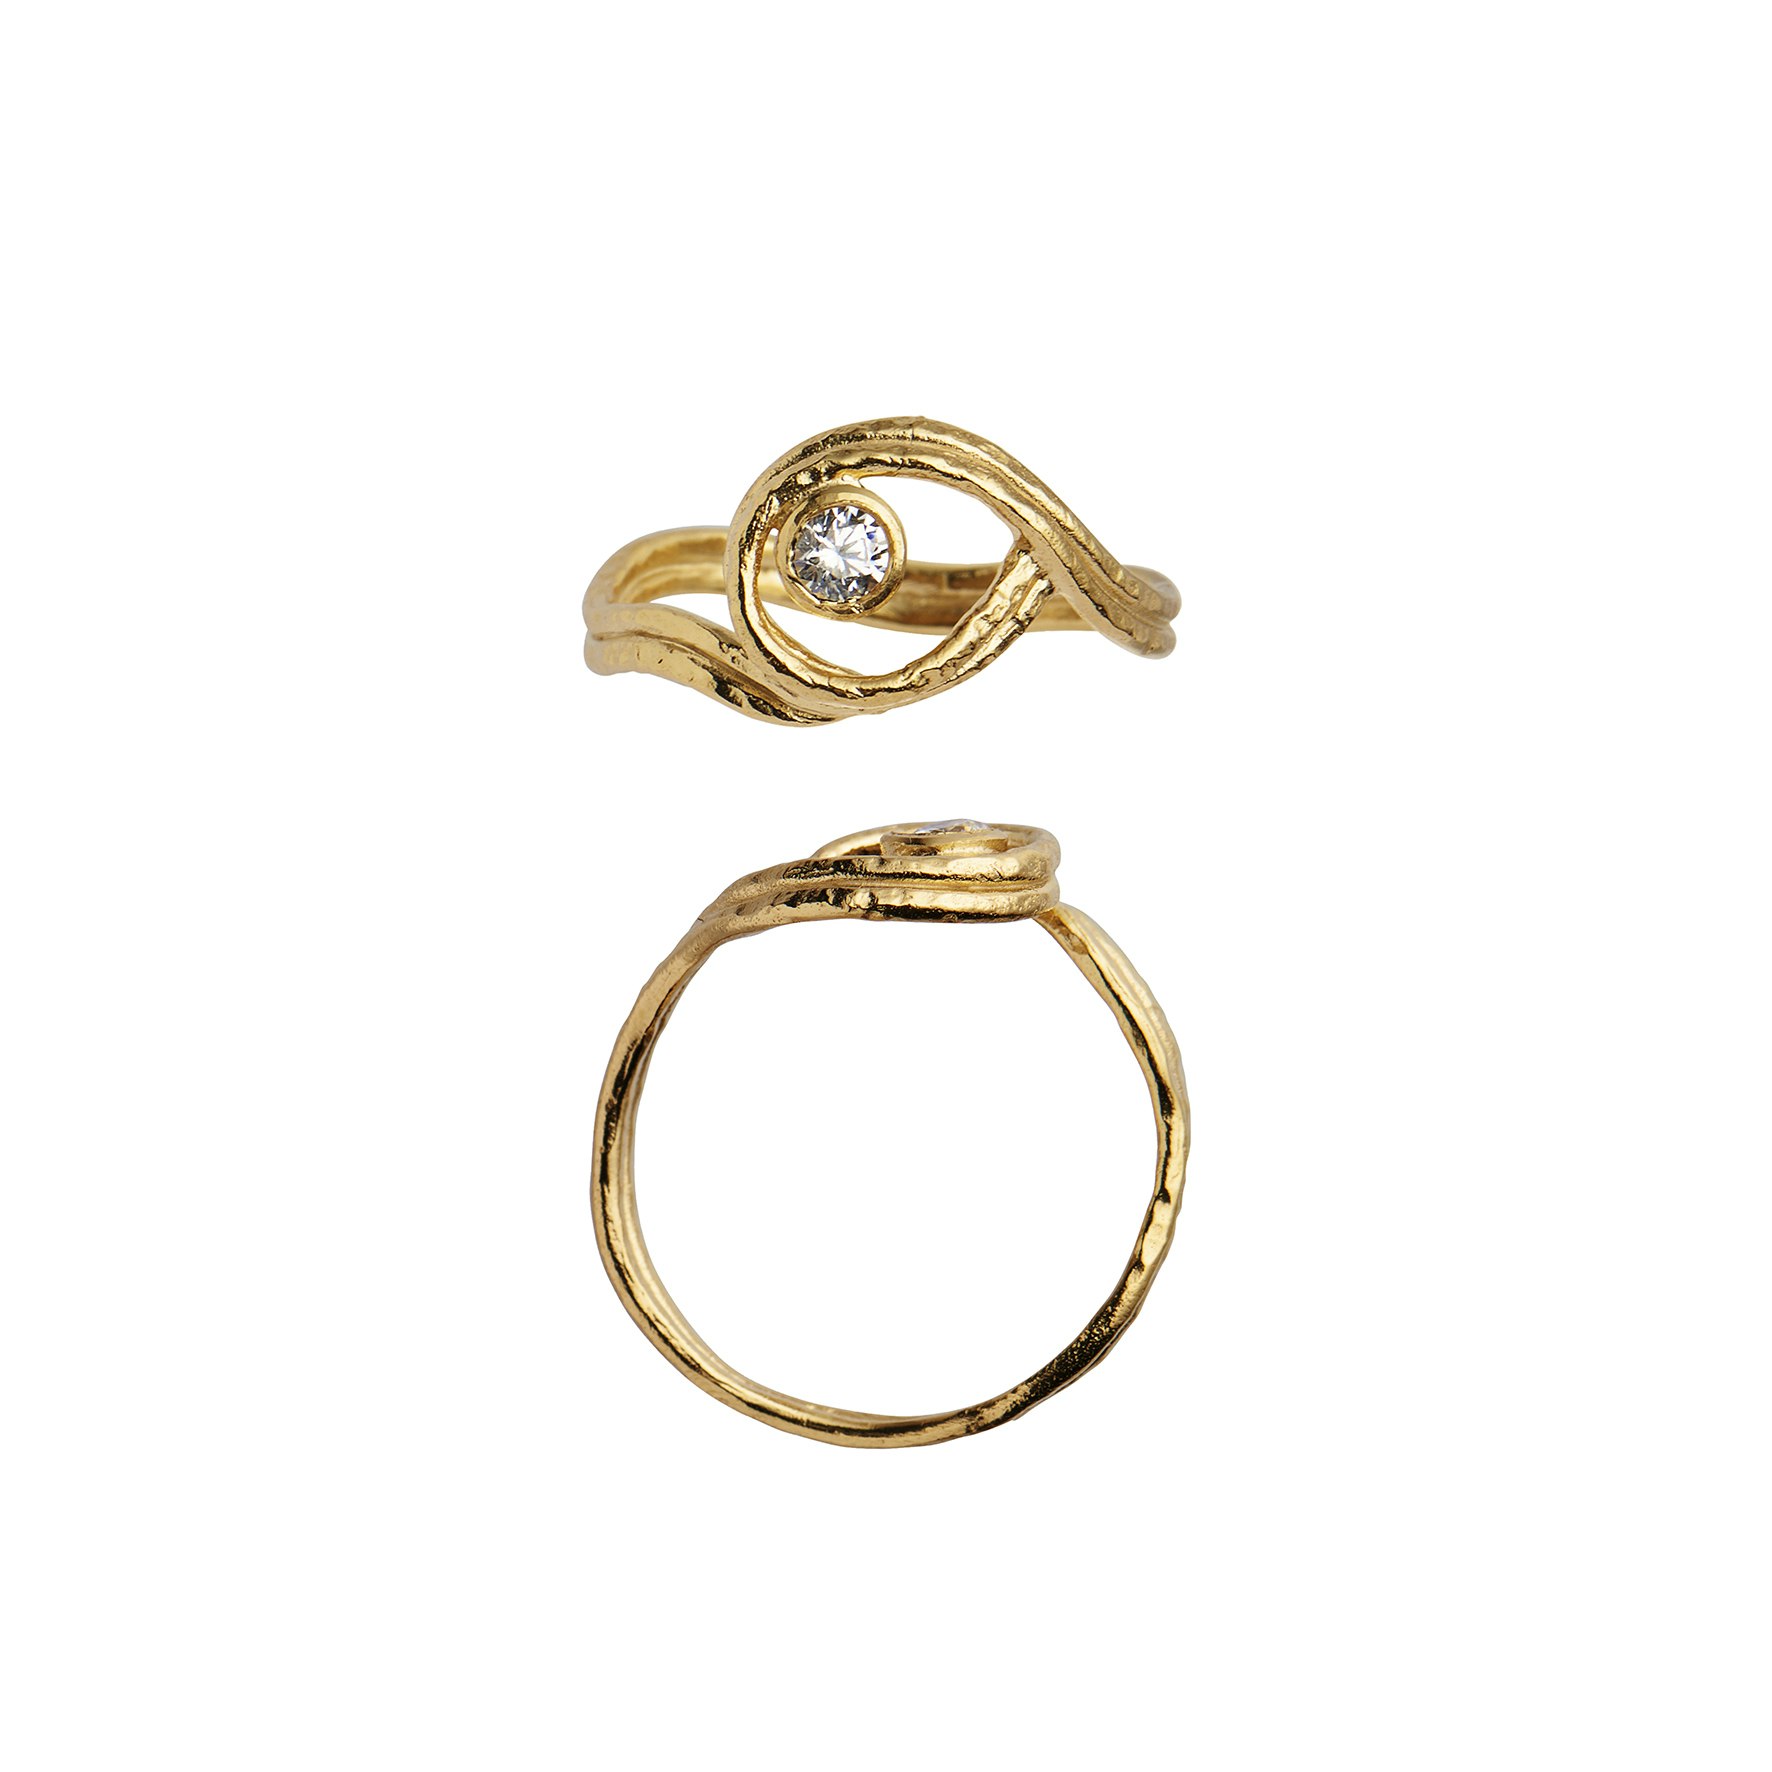 Balance Ring With Stone fra STINE A Jewelry i Forgyldt-Sølv Sterling 925